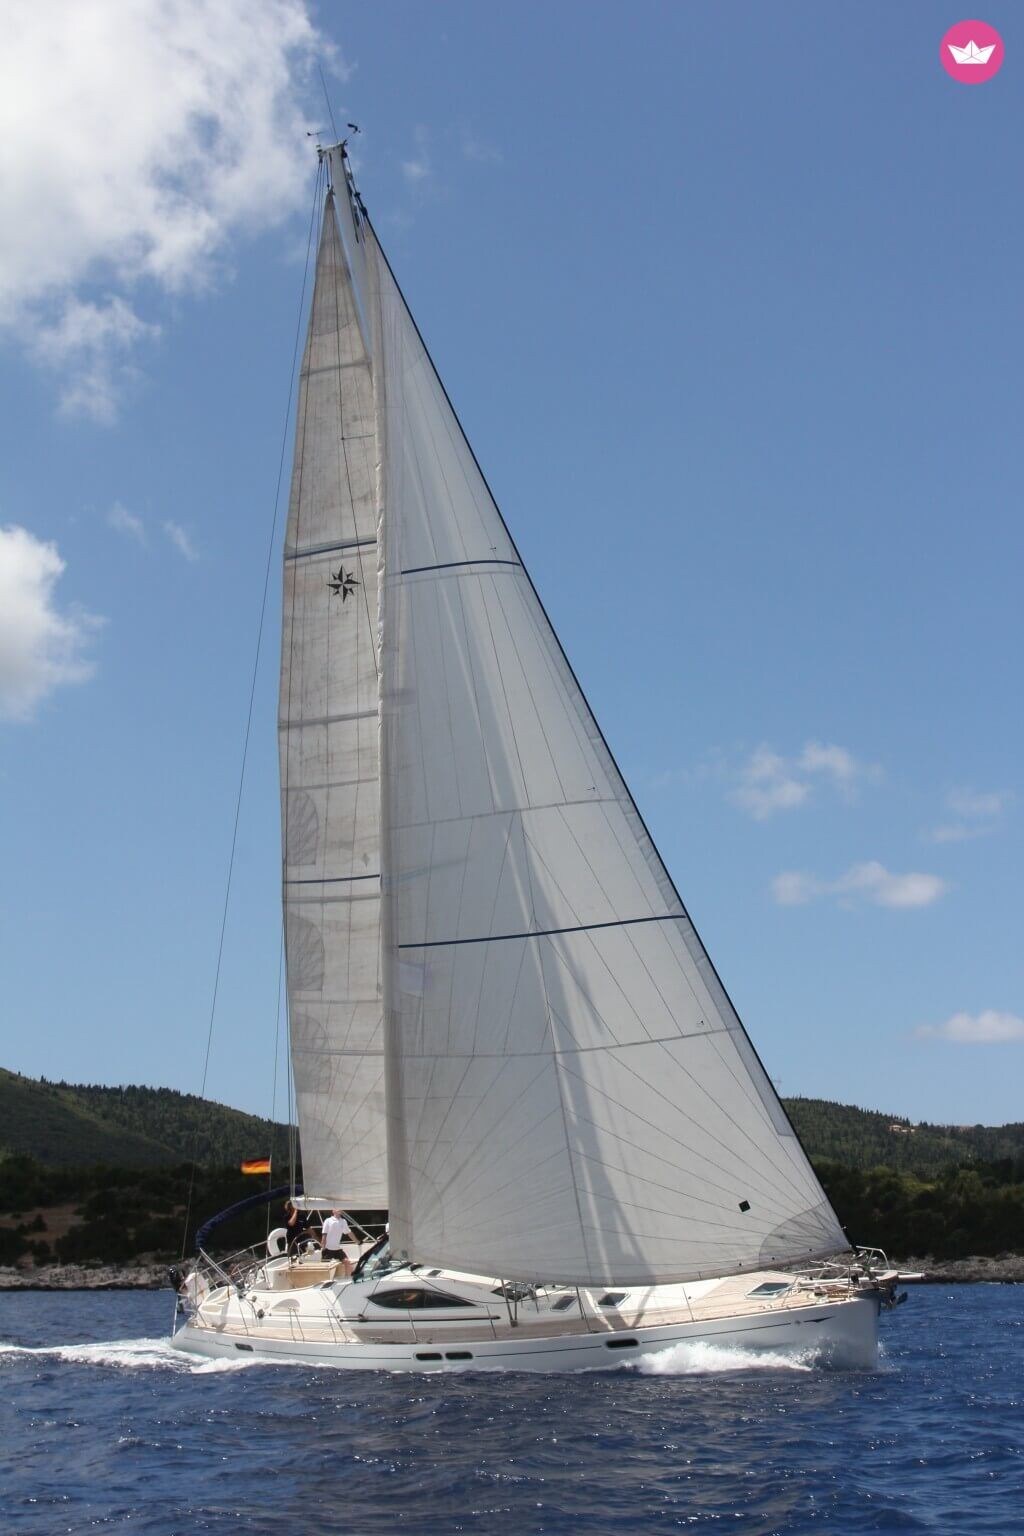 Greececruise 17m.sailboat w.chef